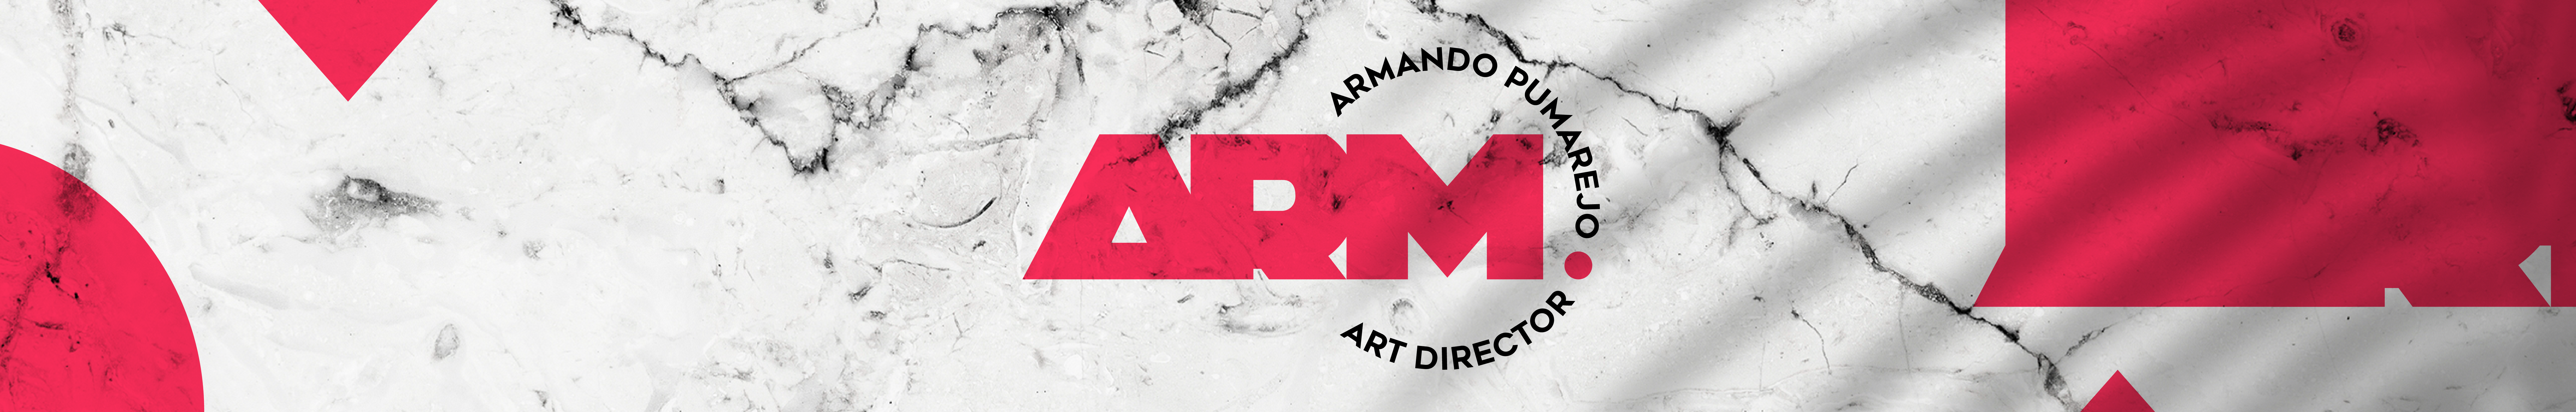 Armando Pumarejo's profile banner